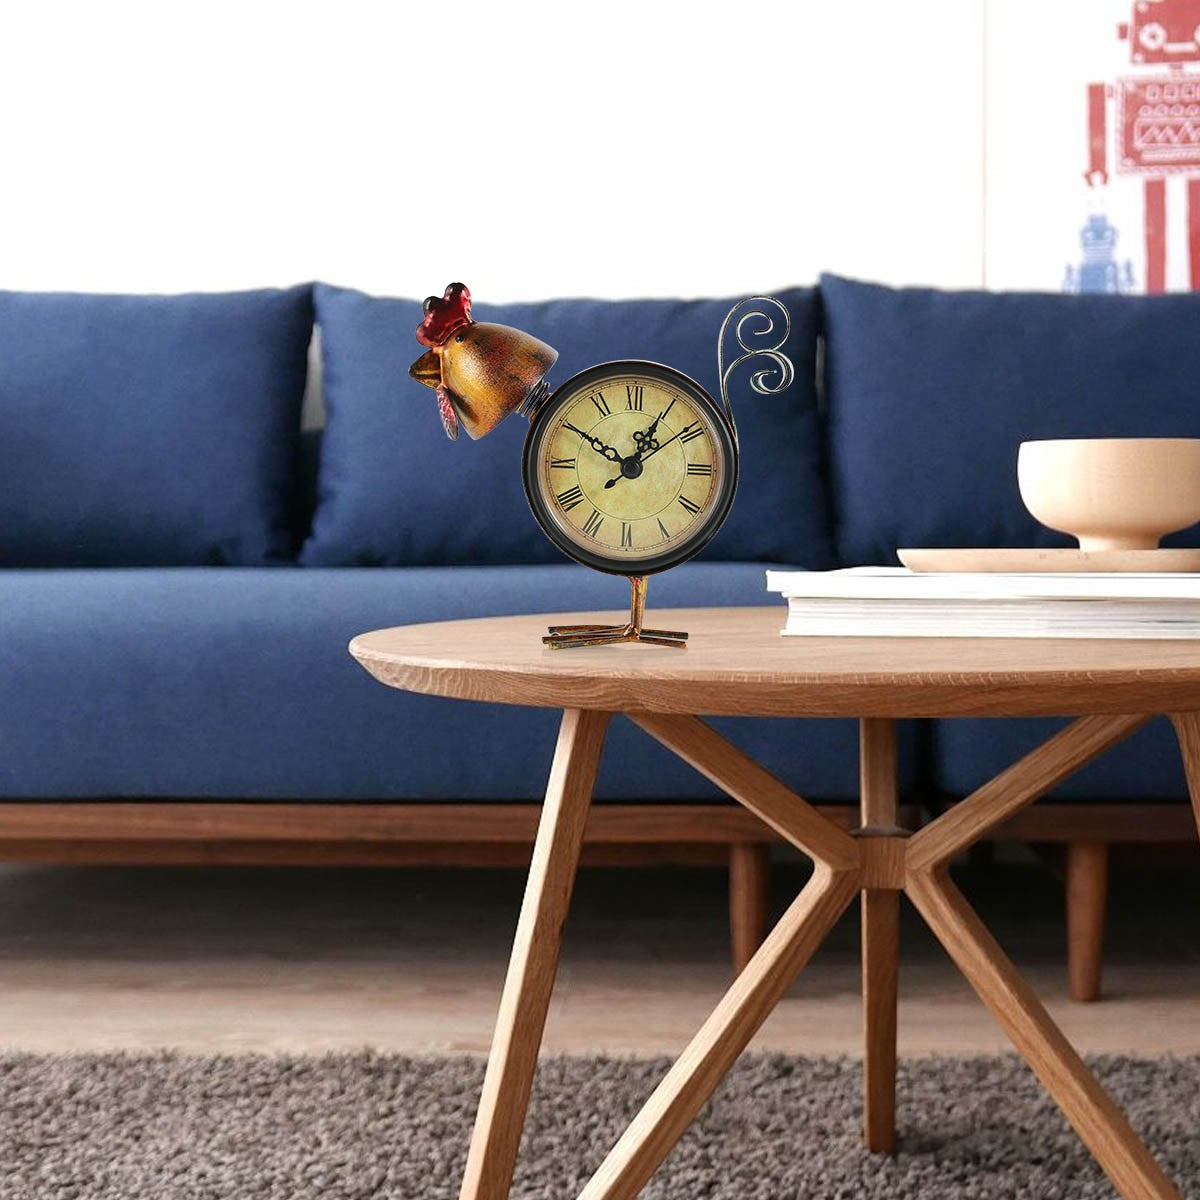 Diy Room Decor and Diy Home Decor with Analog Clock for Homemade Christmas Decorations